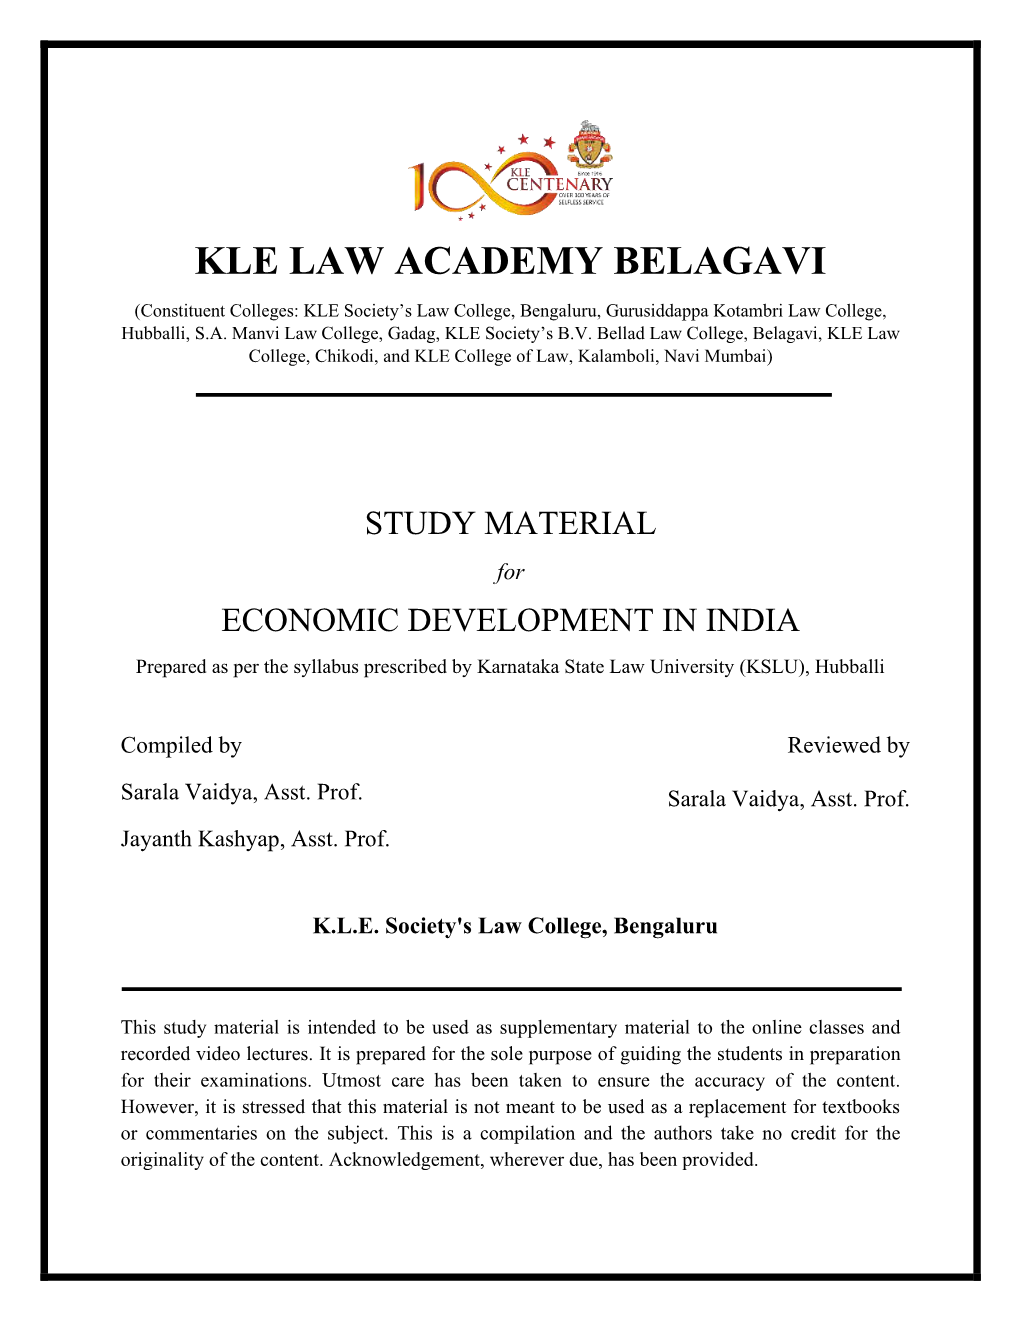 ECONOMIC DEVELOPMENT in INDIA Prepared As Per the Syllabus Prescribed by Karnataka State Law University (KSLU), Hubballi